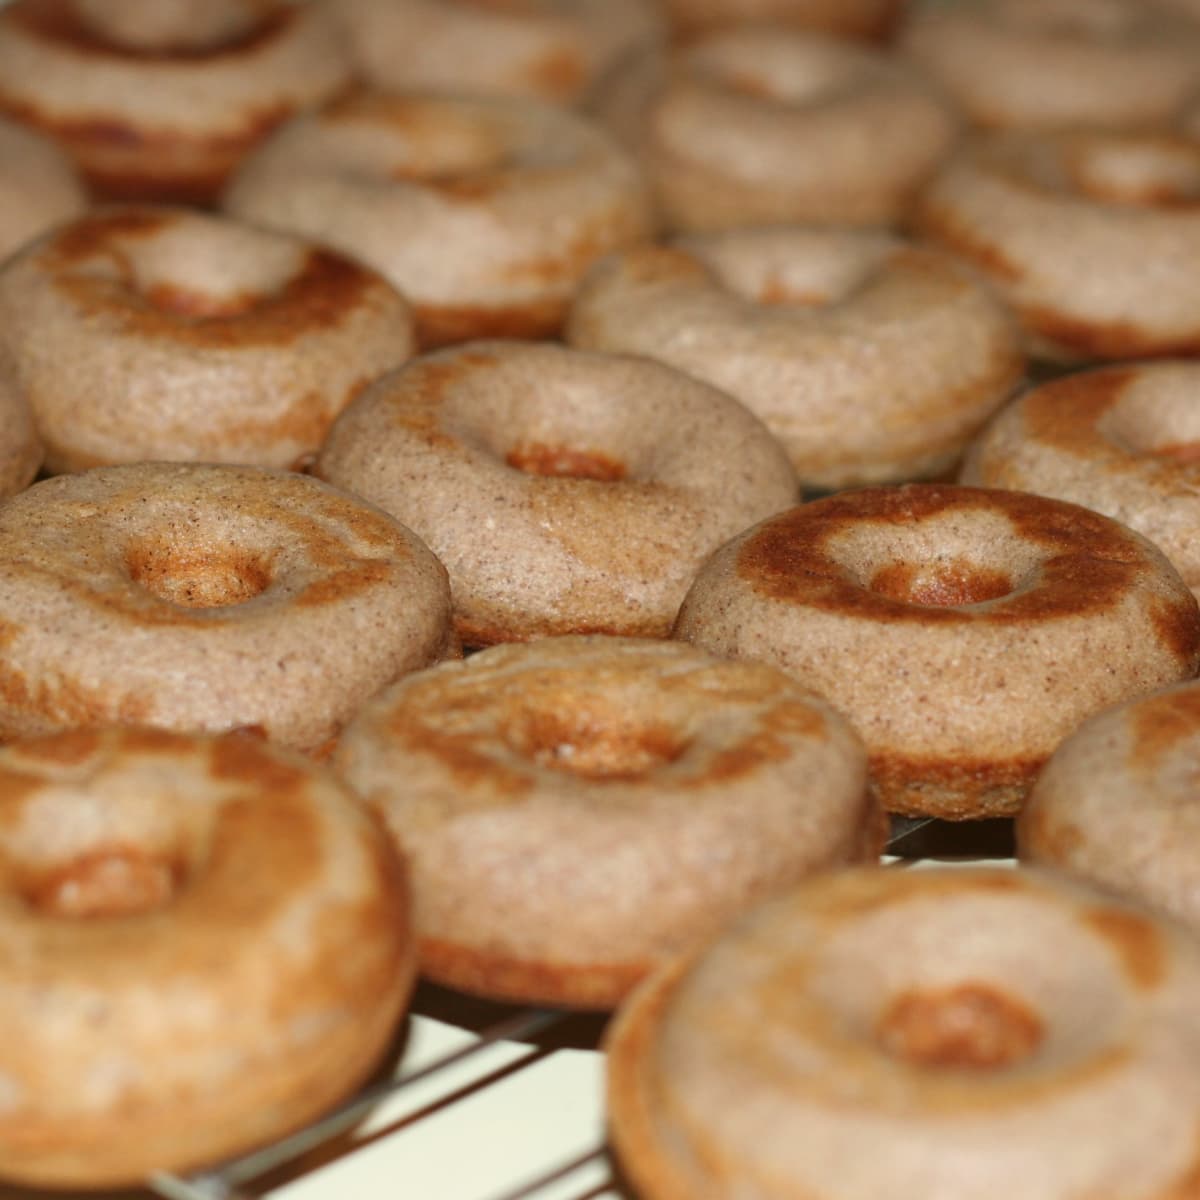 Mini Donut Maker, Cooks 7 Donuts in Minutes